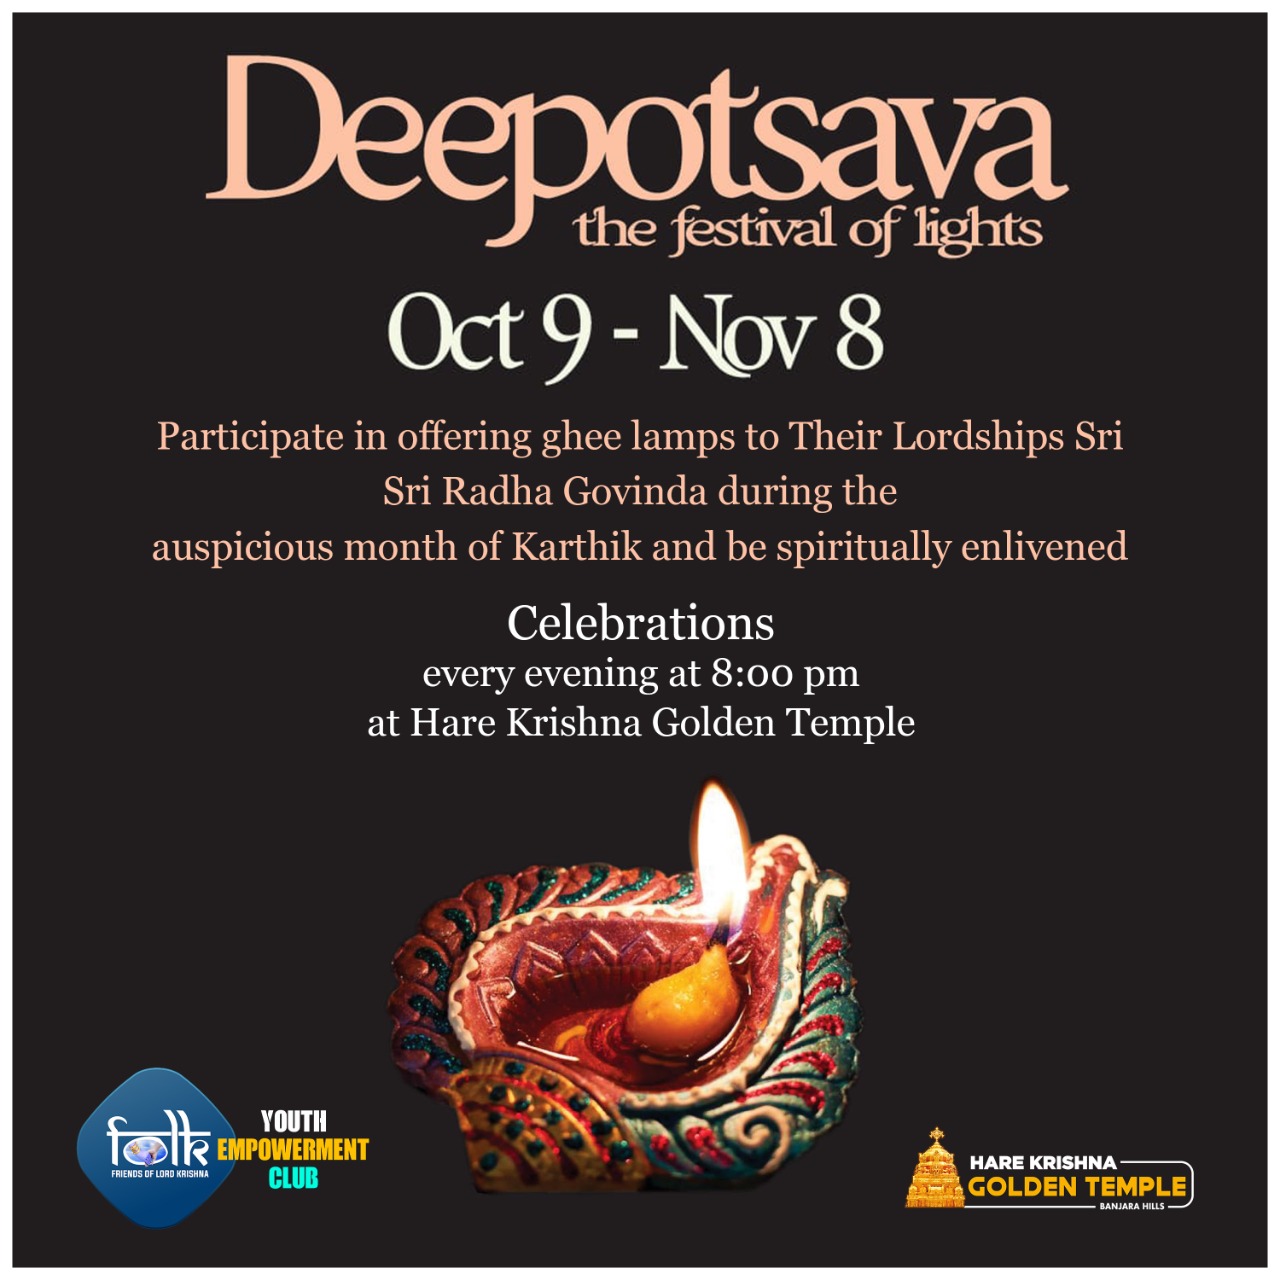 Deepotsava-The festival of lights, Hyderabad, Telangana, India